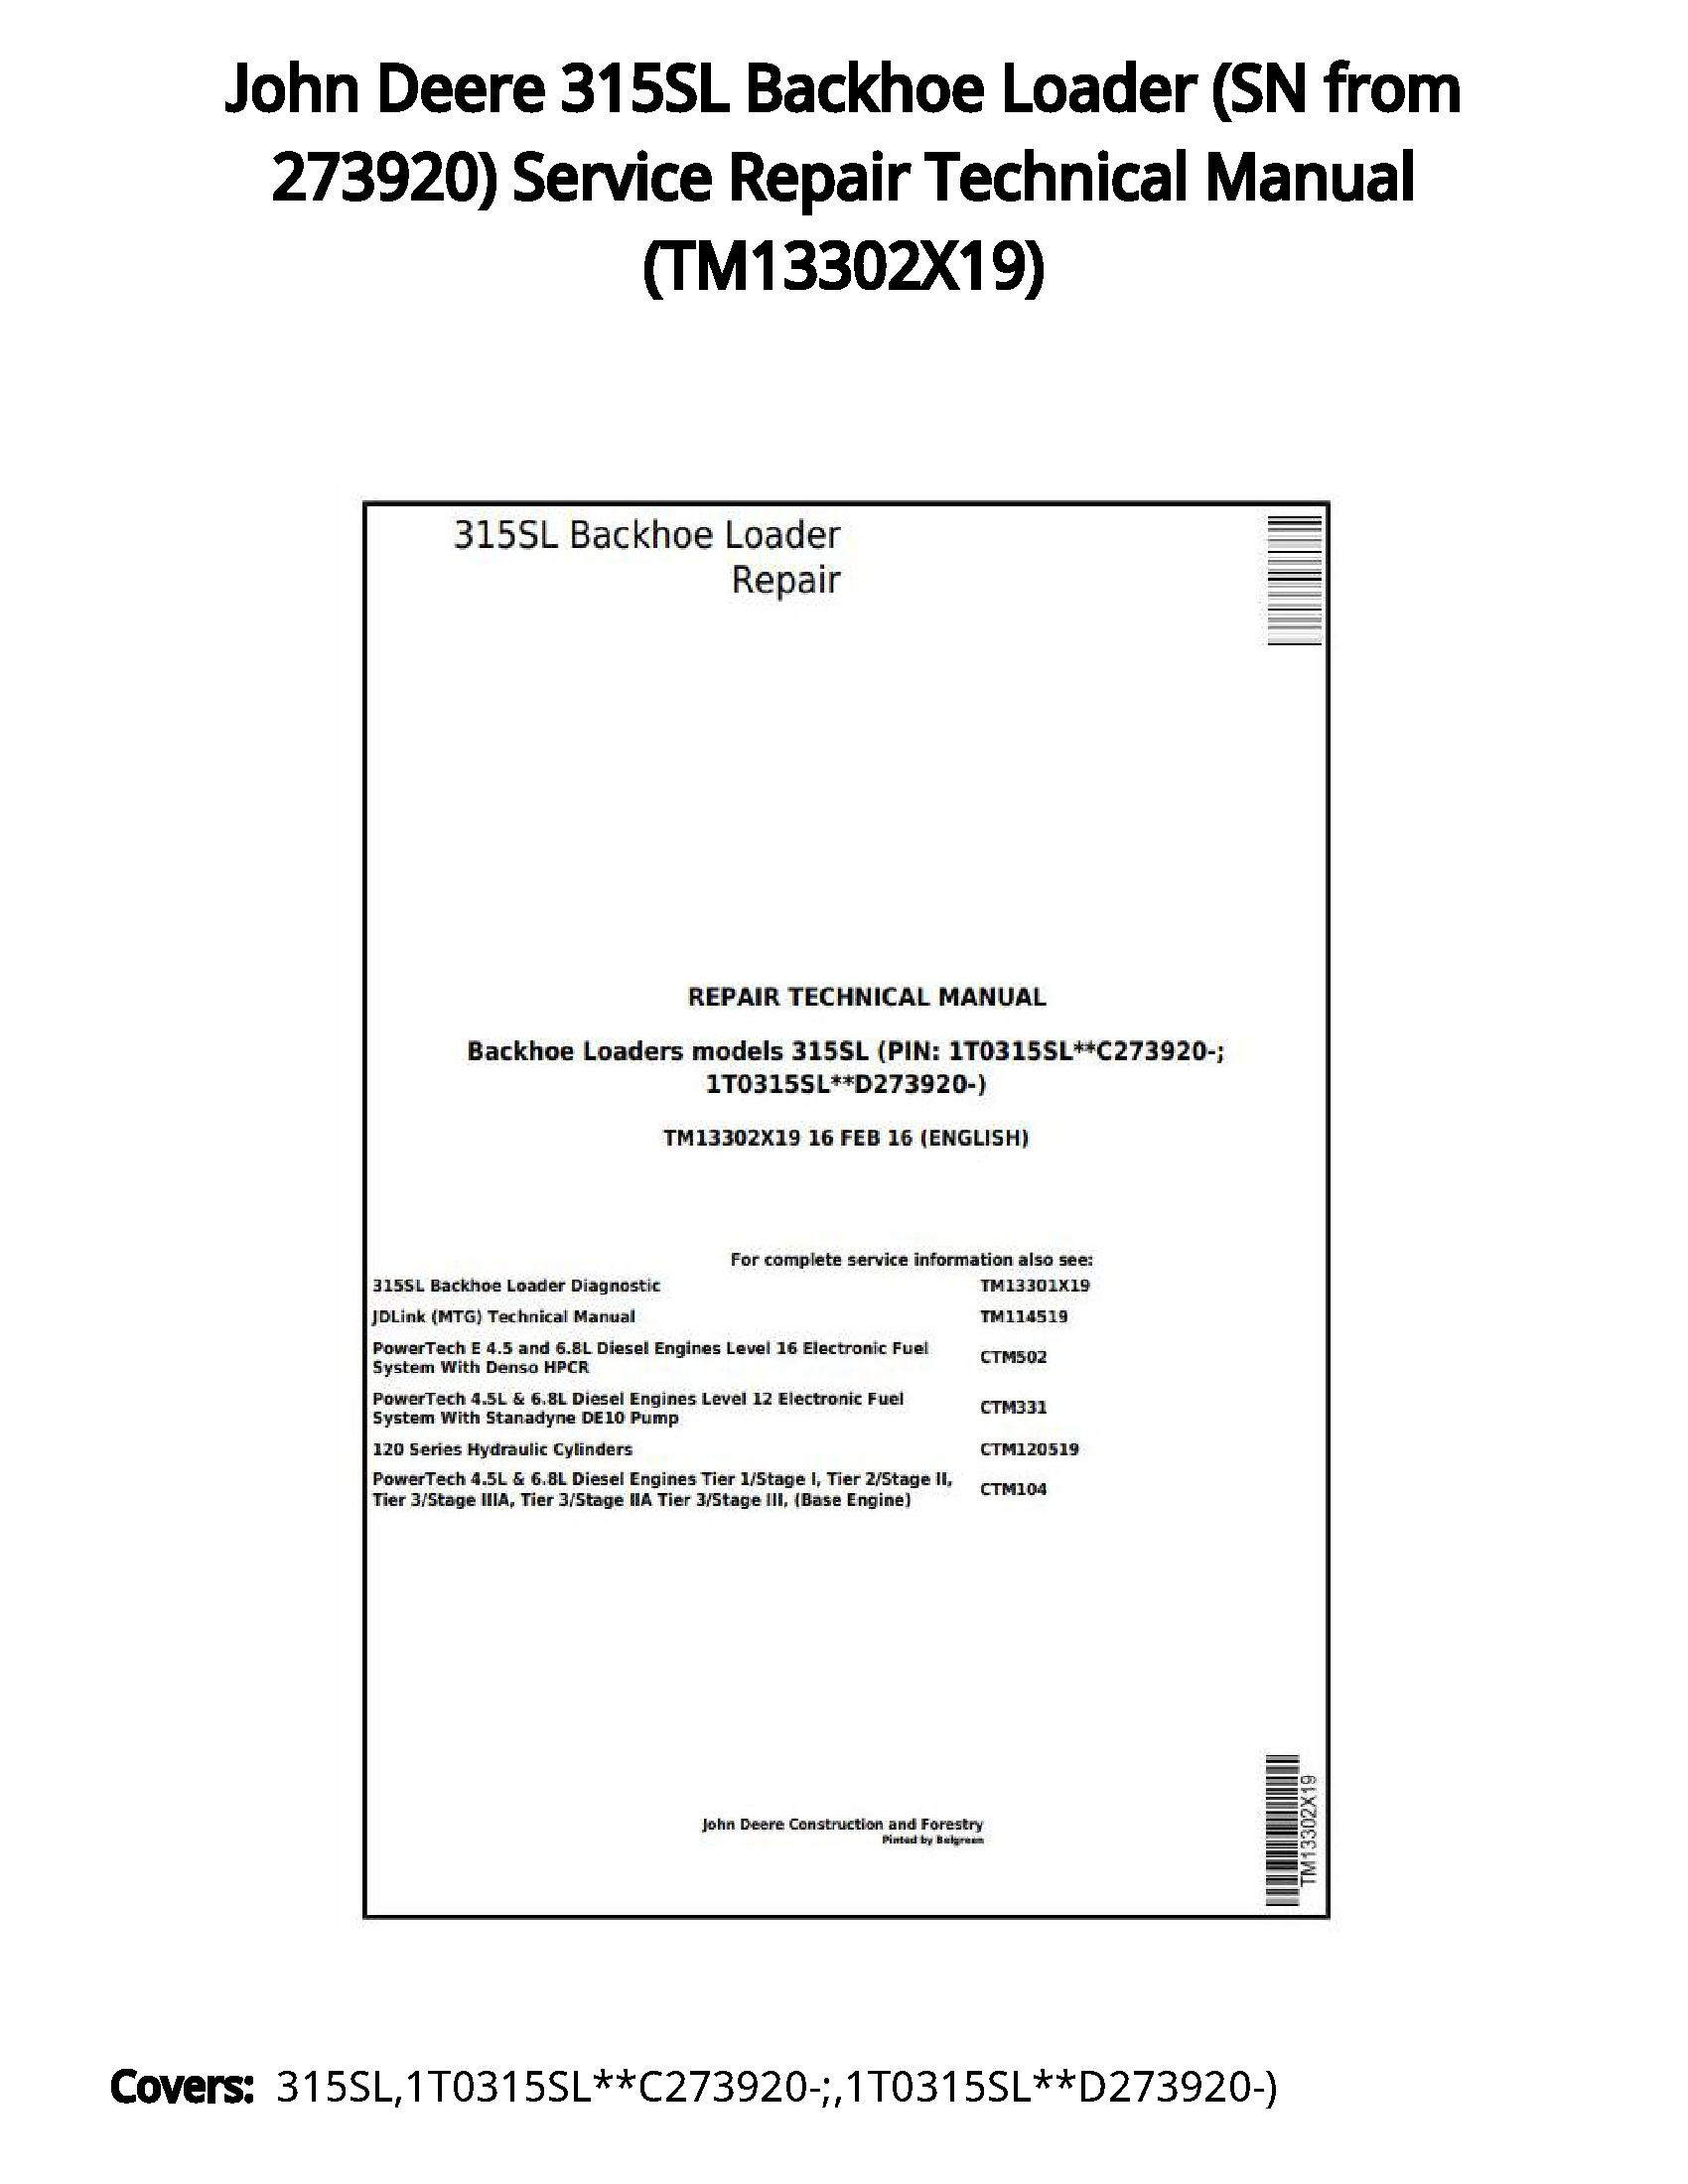 John Deere 315SL Backhoe Loader (SN from 273920) Service Repair Technical Manual - TM13302X19